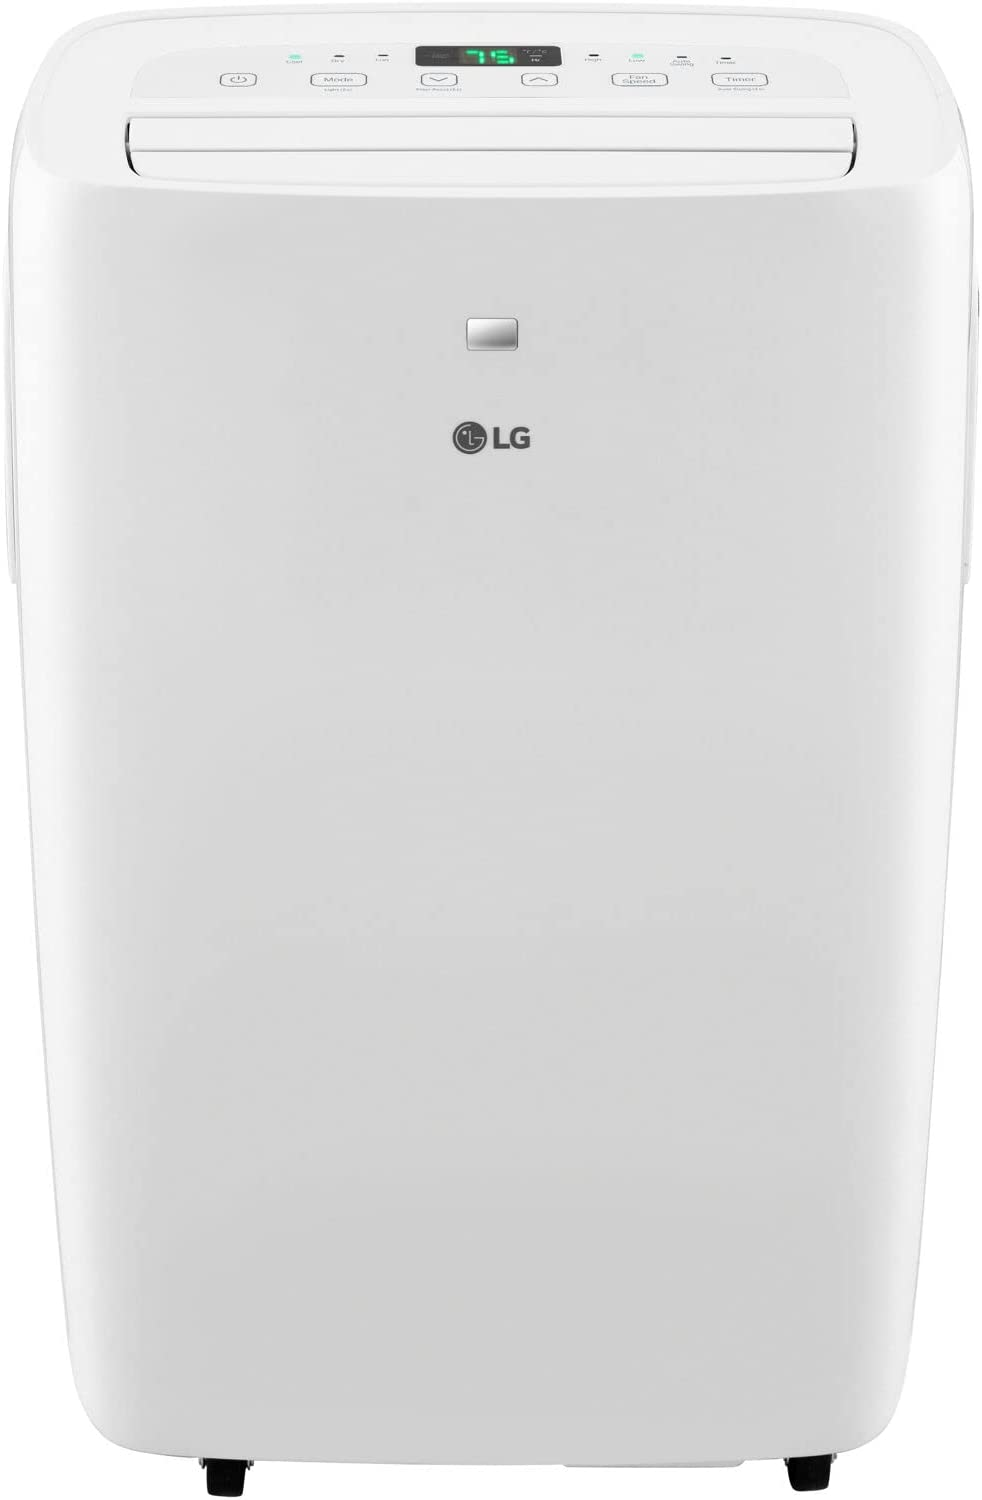 Amazon.com: LG 6,000 BTU (DOE) / 8,000 BTU (ASHRAE) Portable Air Conditioner, Cools 250 Sq.Ft $260